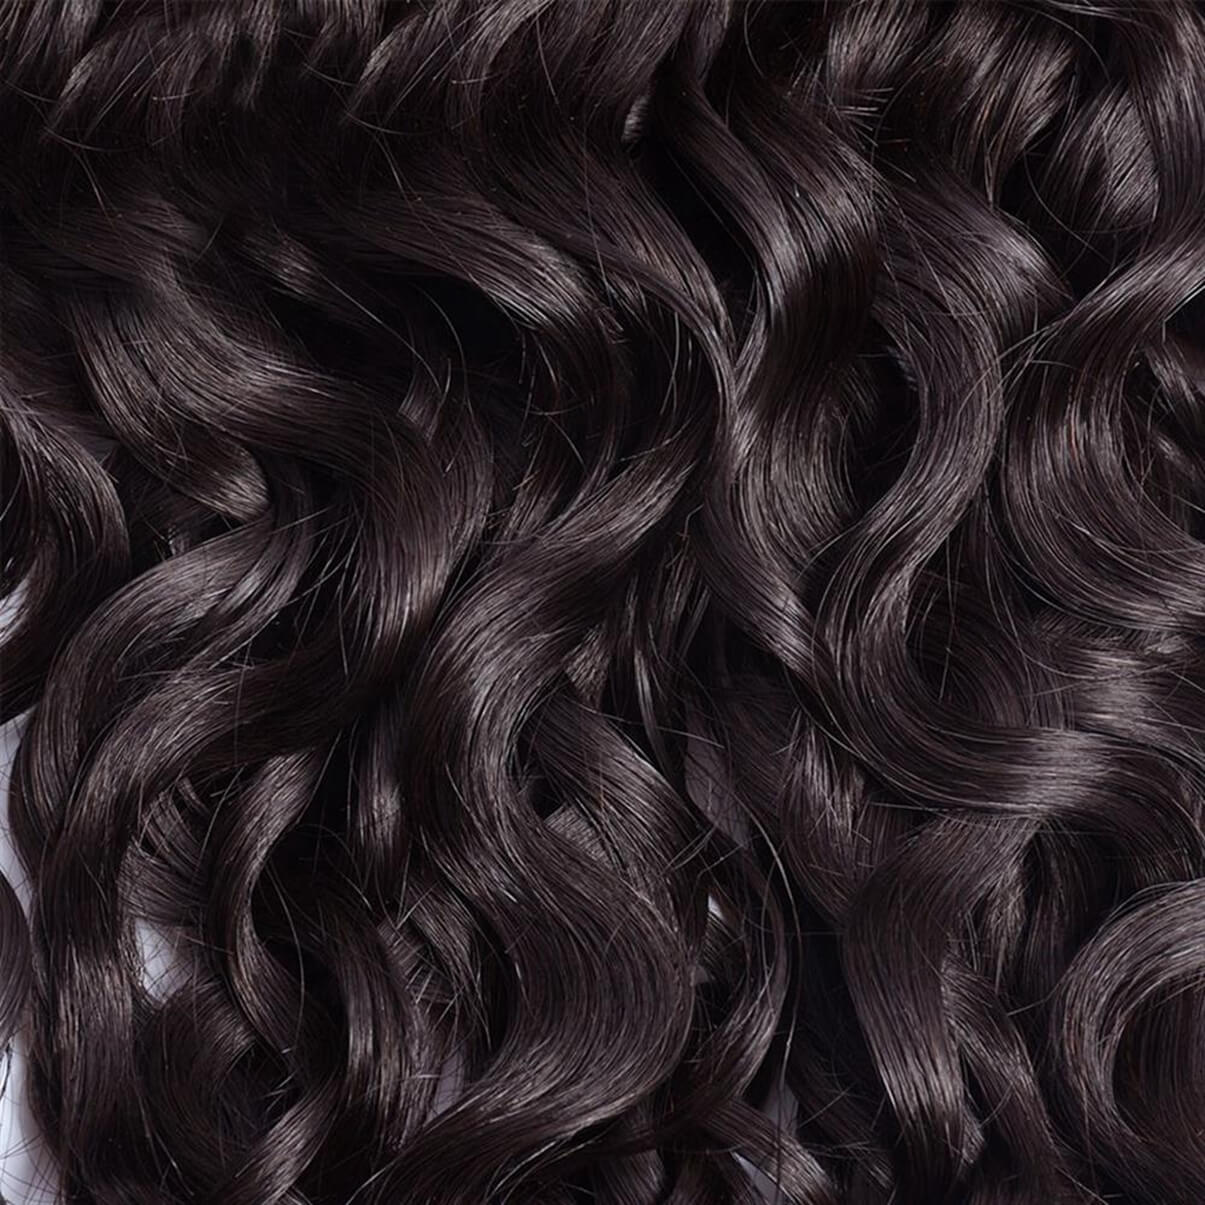 Lakihair 8A Grade Virgin Human Hair Water Wave Hair Extensions 2 Bundles With 360 Lace Frontal